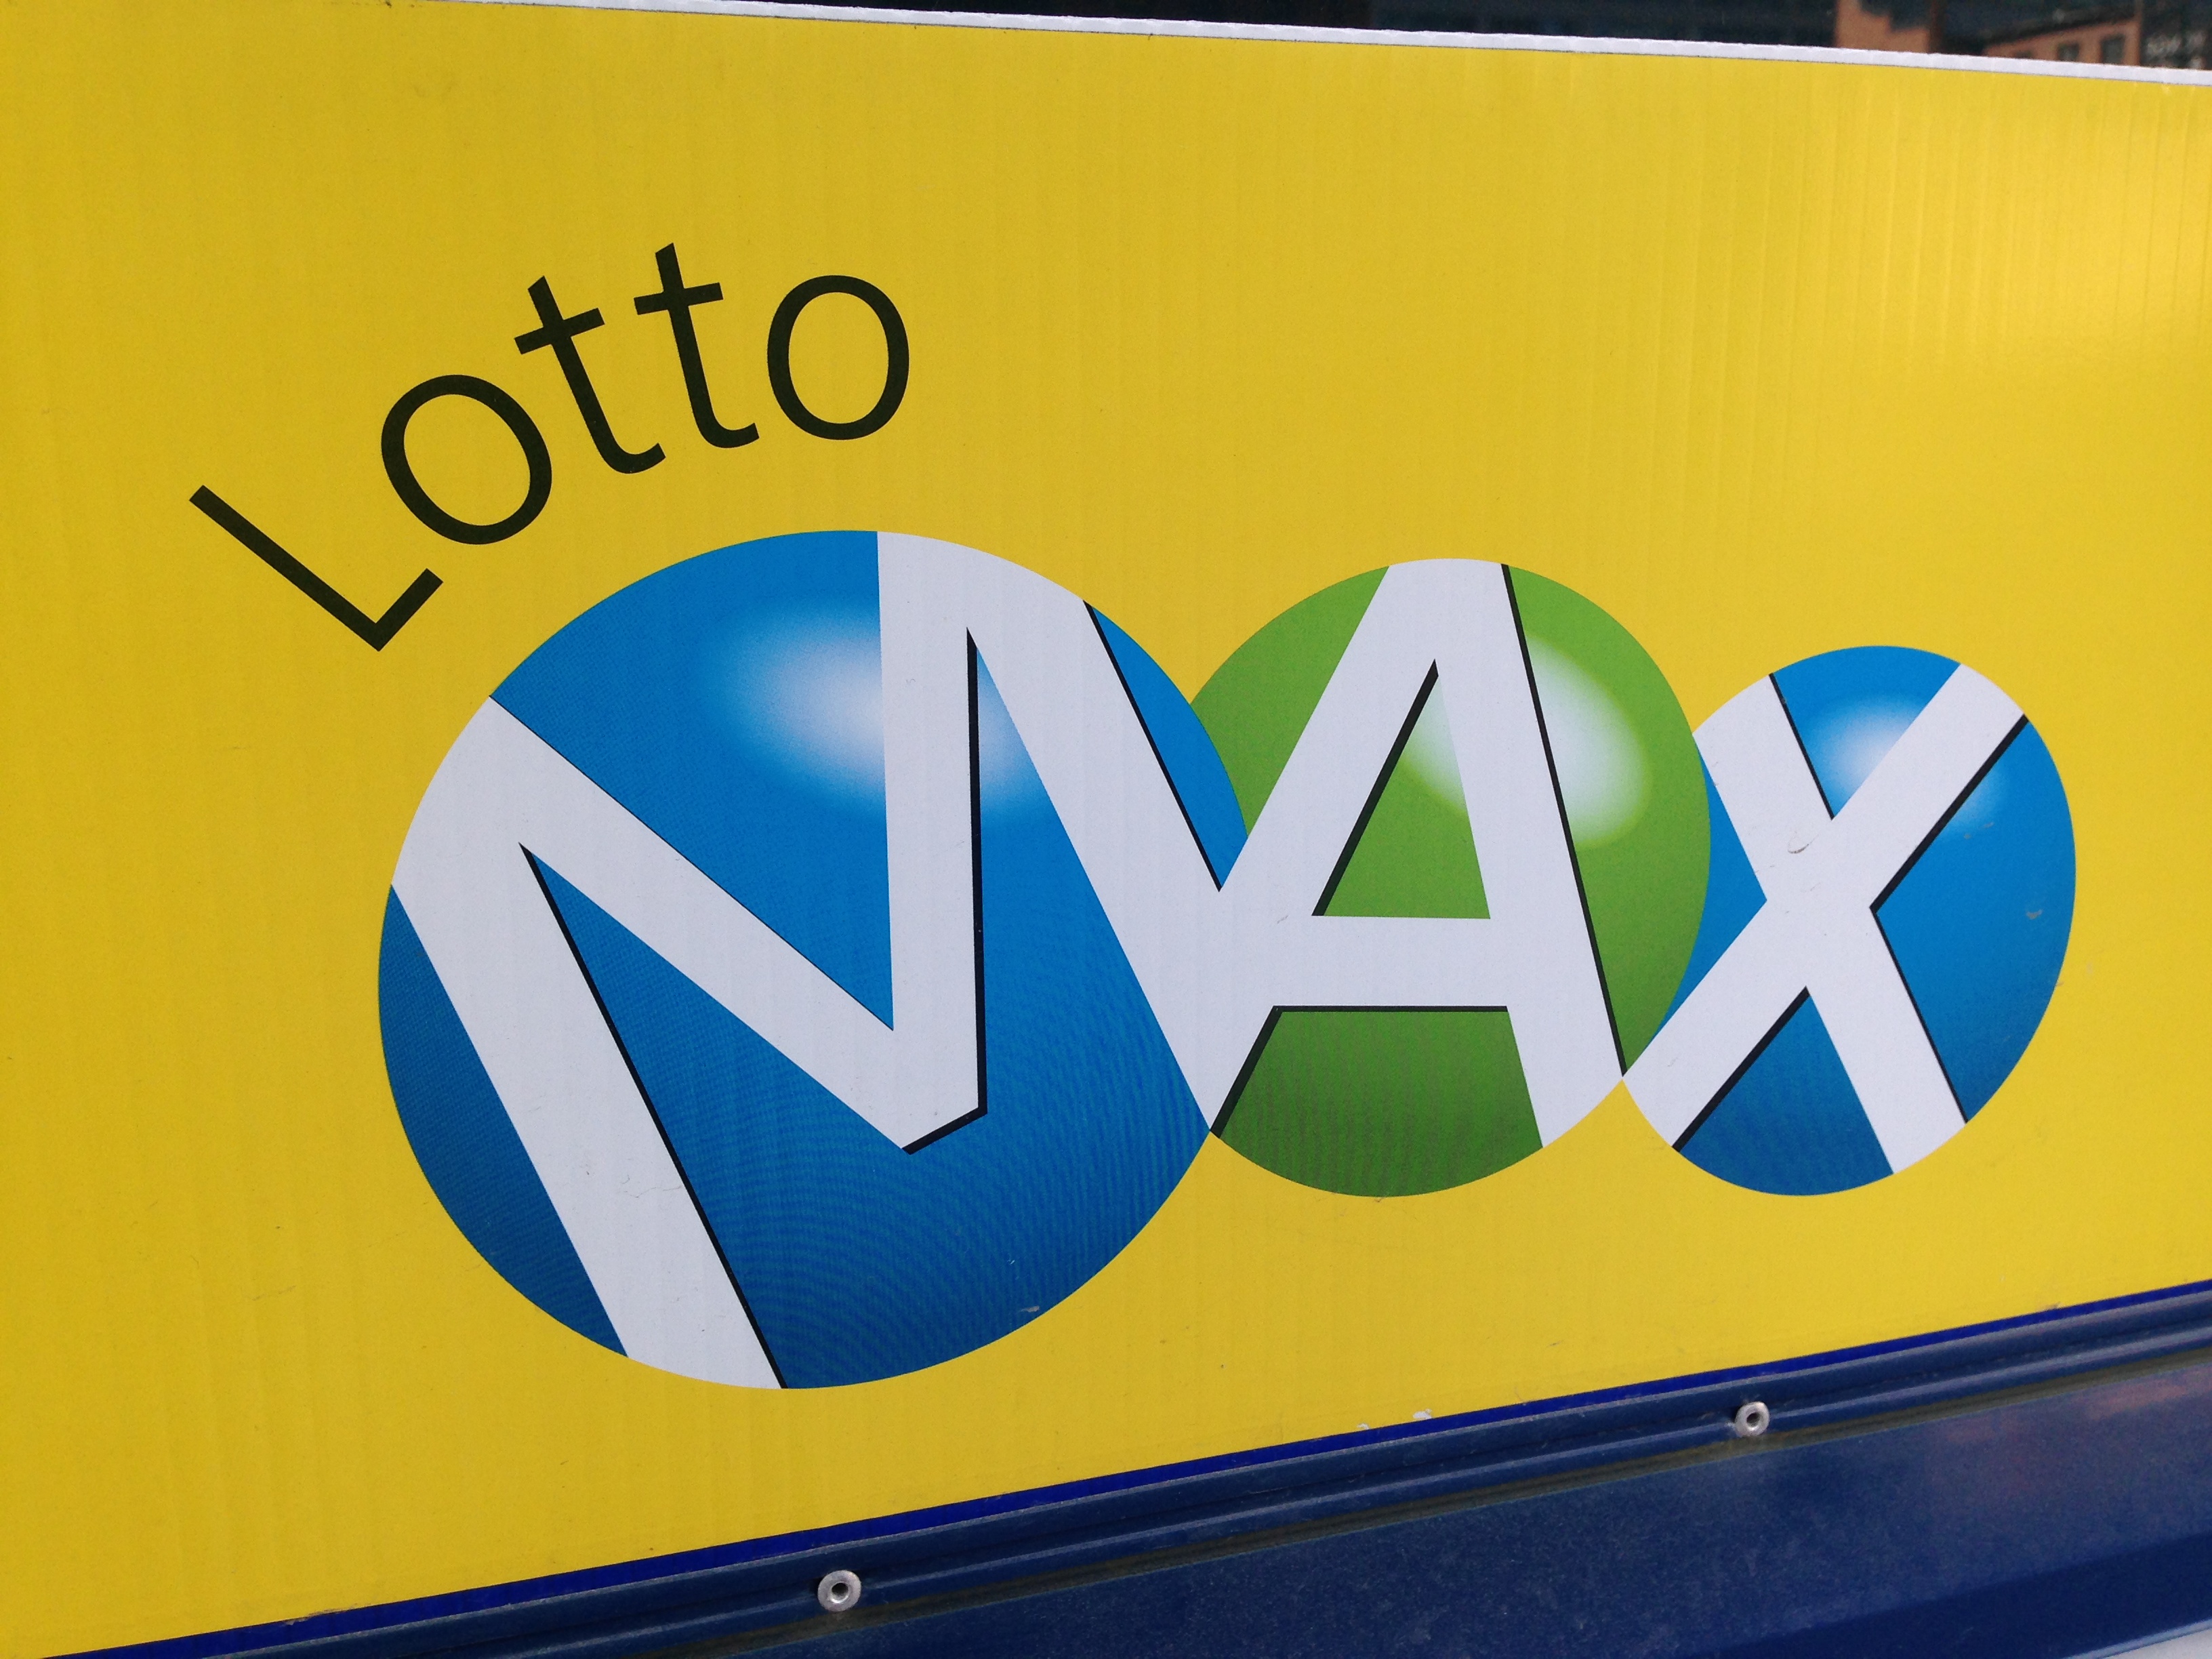 lotto max winning numbers april 20 2018